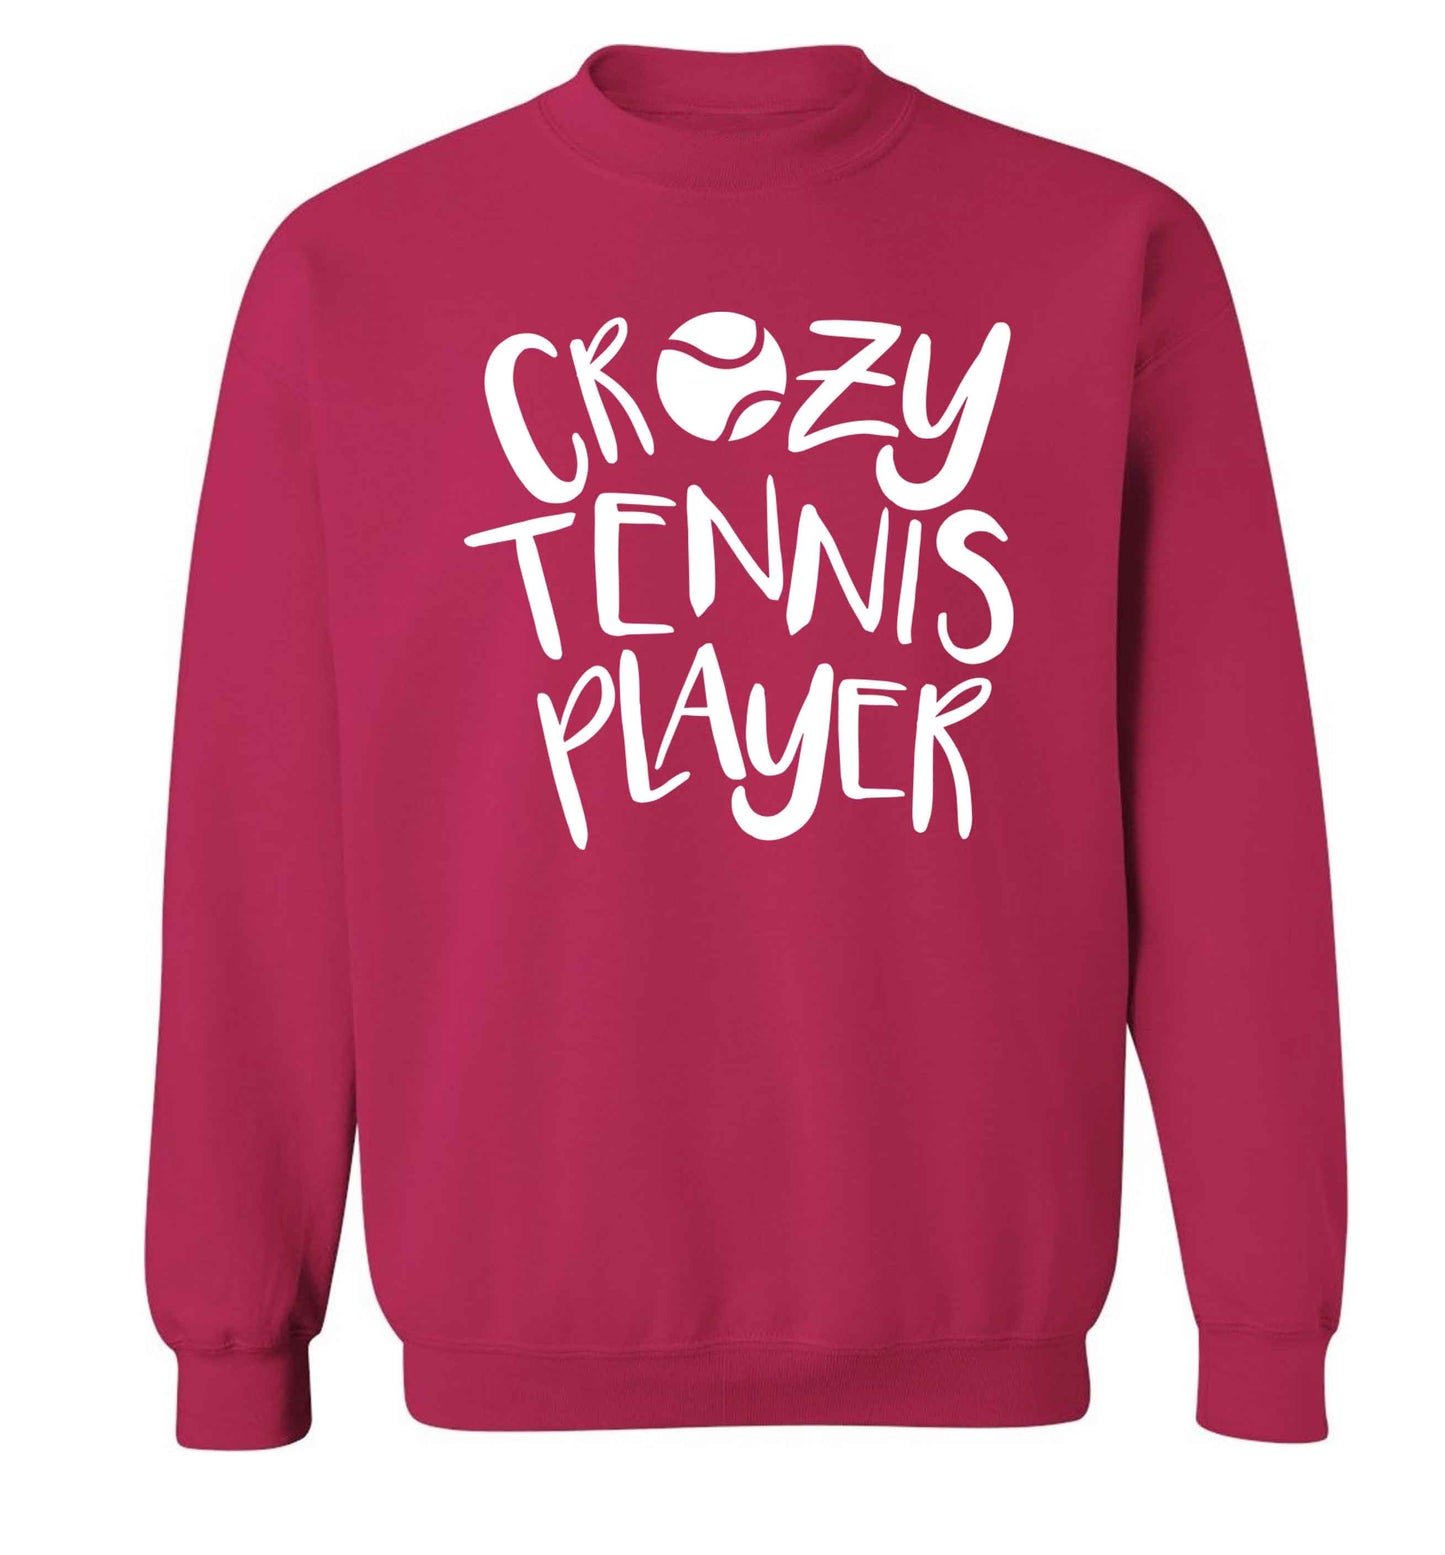 Crazy tennis player Adult's unisex pink Sweater 2XL